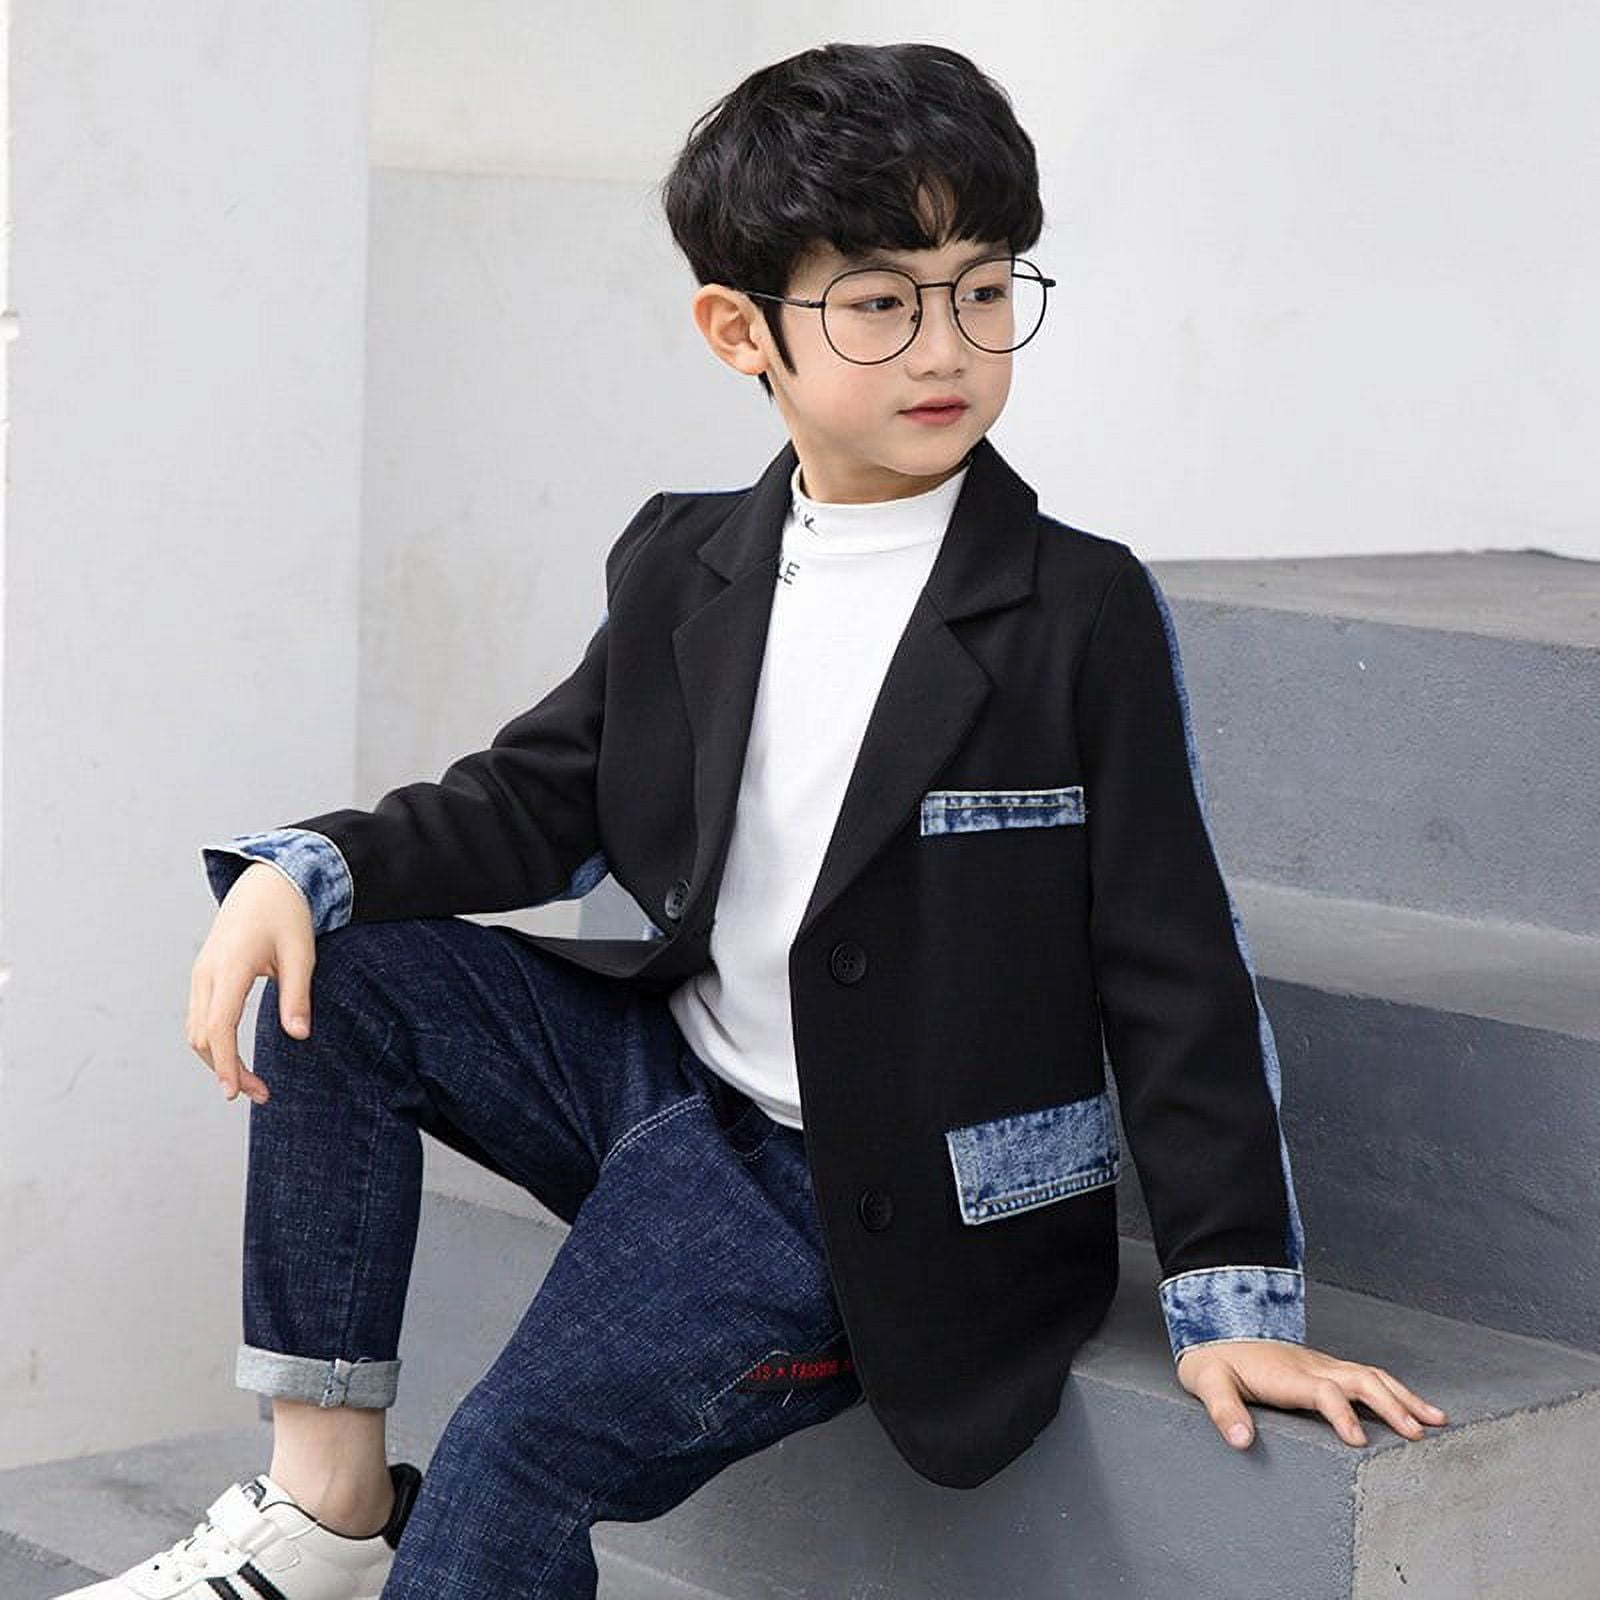 fcity.in - Modern Fancy Kids Denim Wear Shirt With Denim Jacket And Jeans  Kids